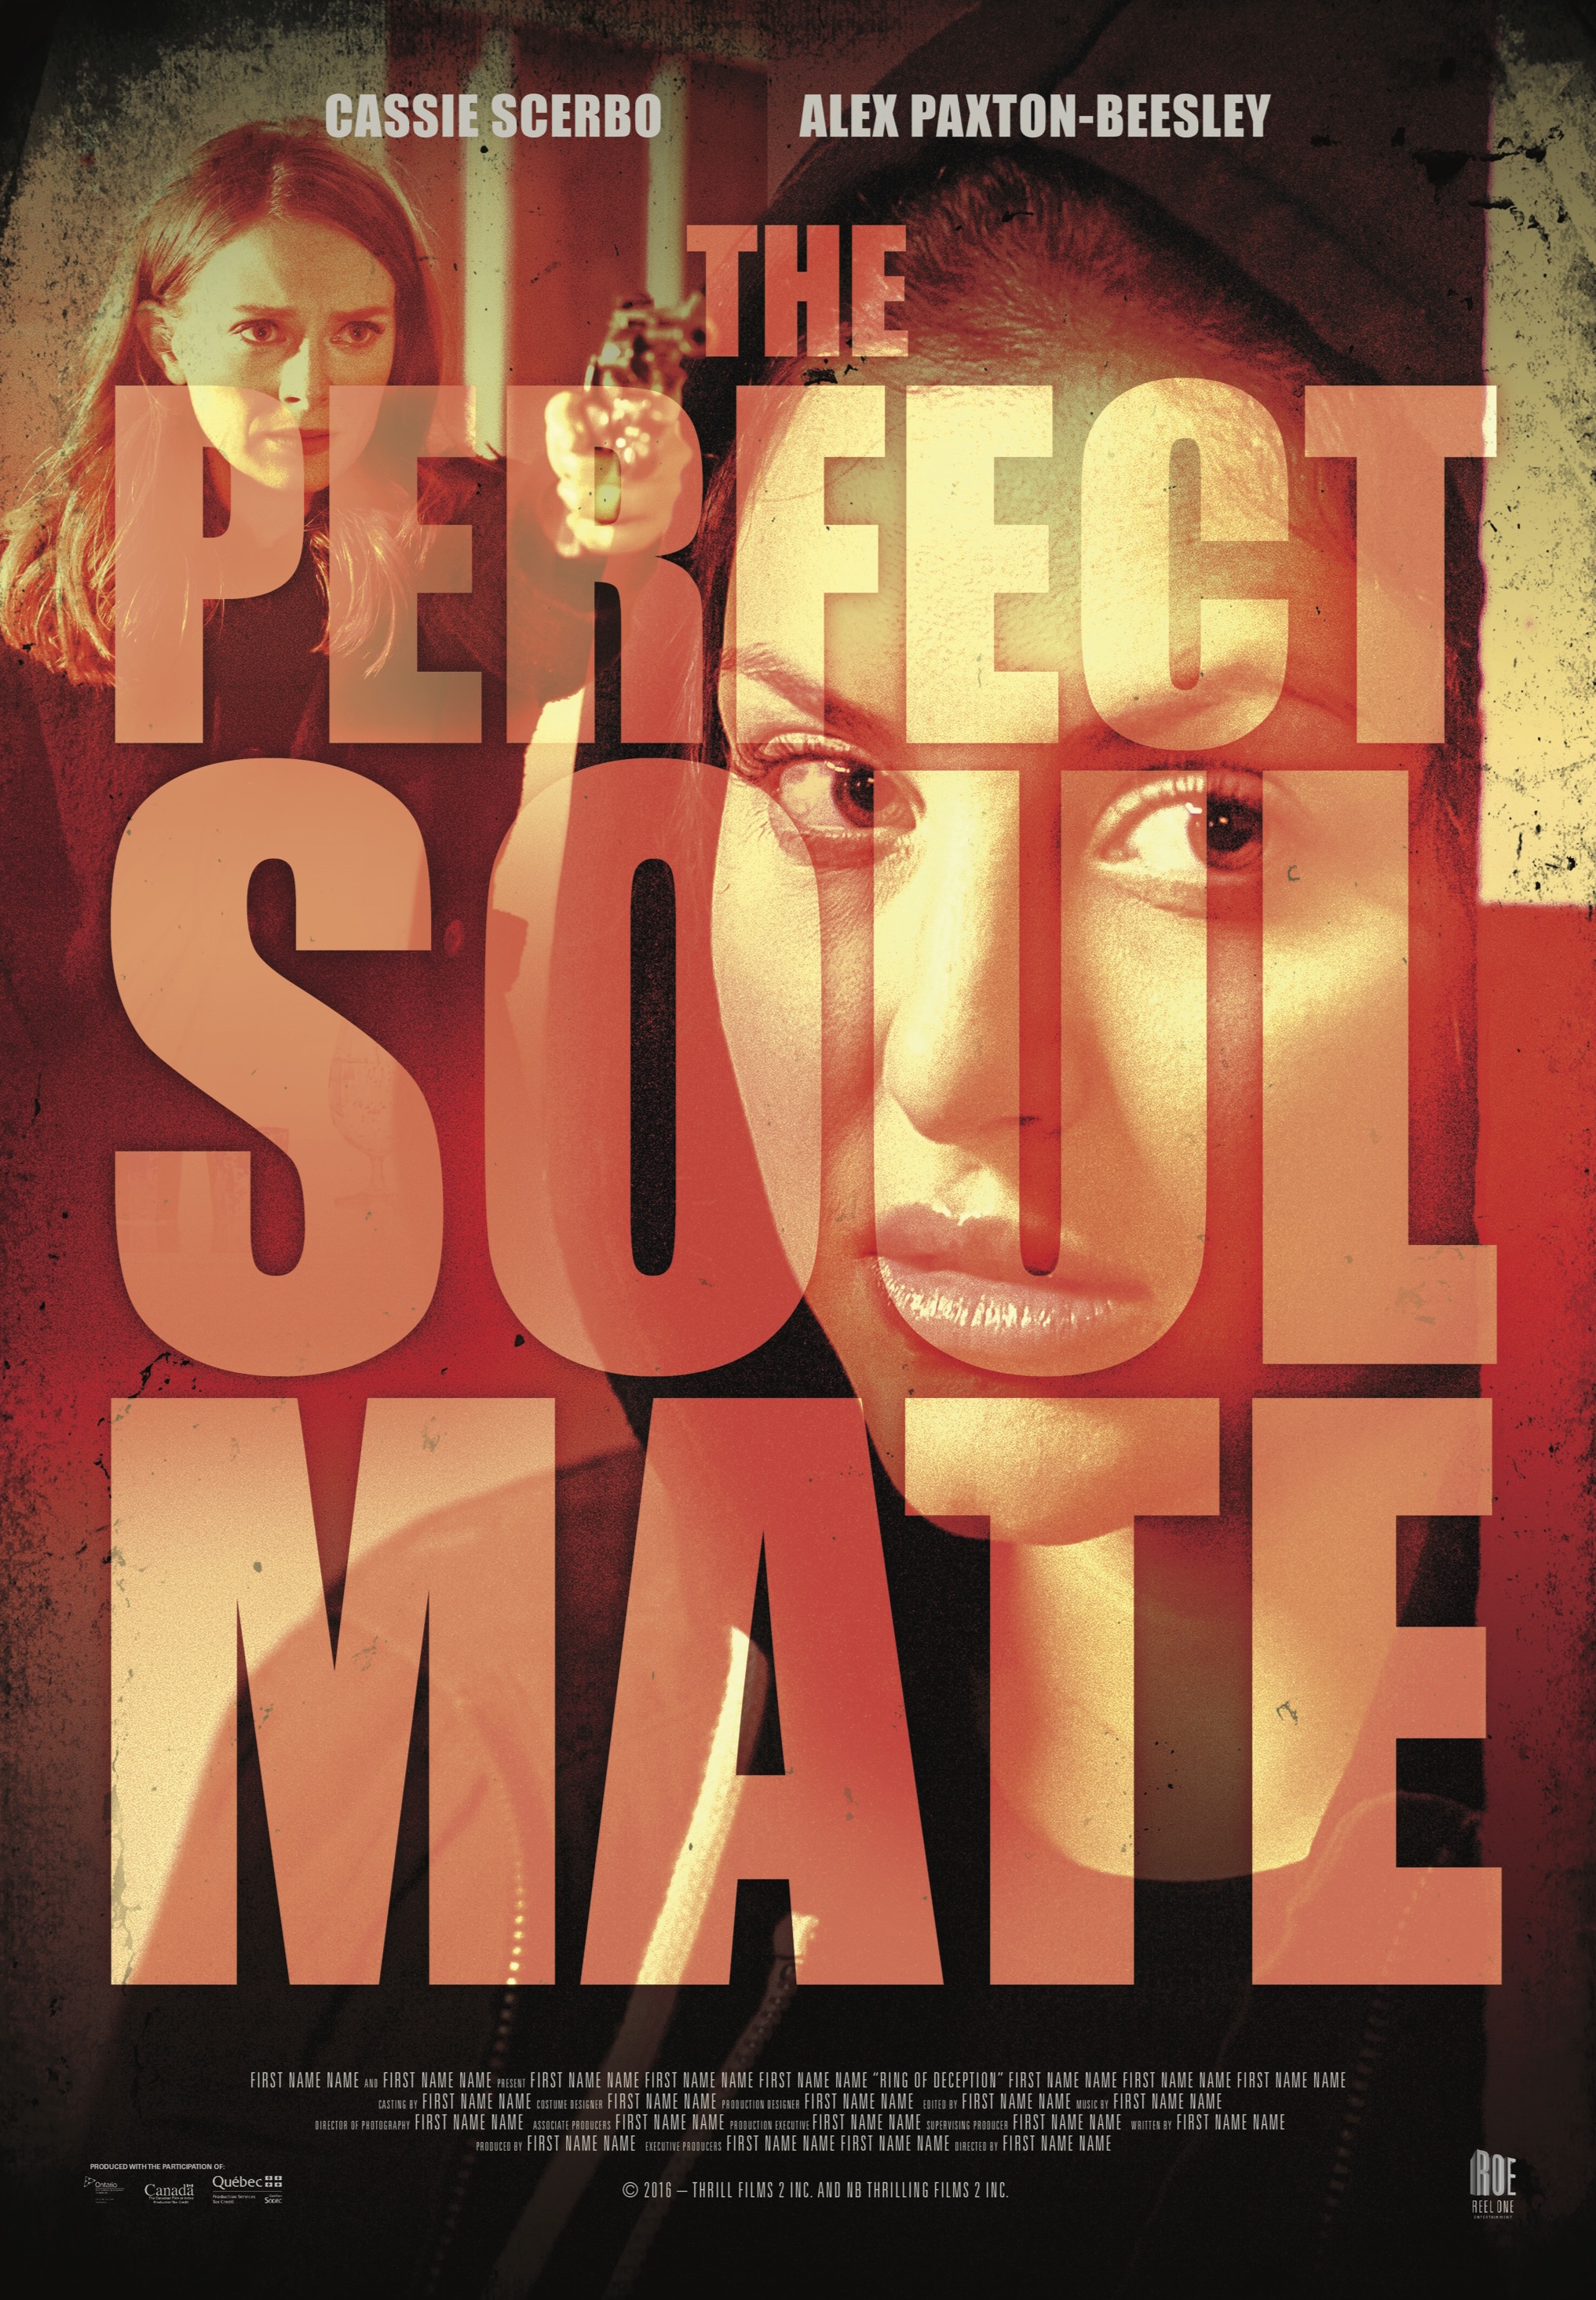 Nonton film The Perfect Soulmate layarkaca21 indoxx1 ganool online streaming terbaru